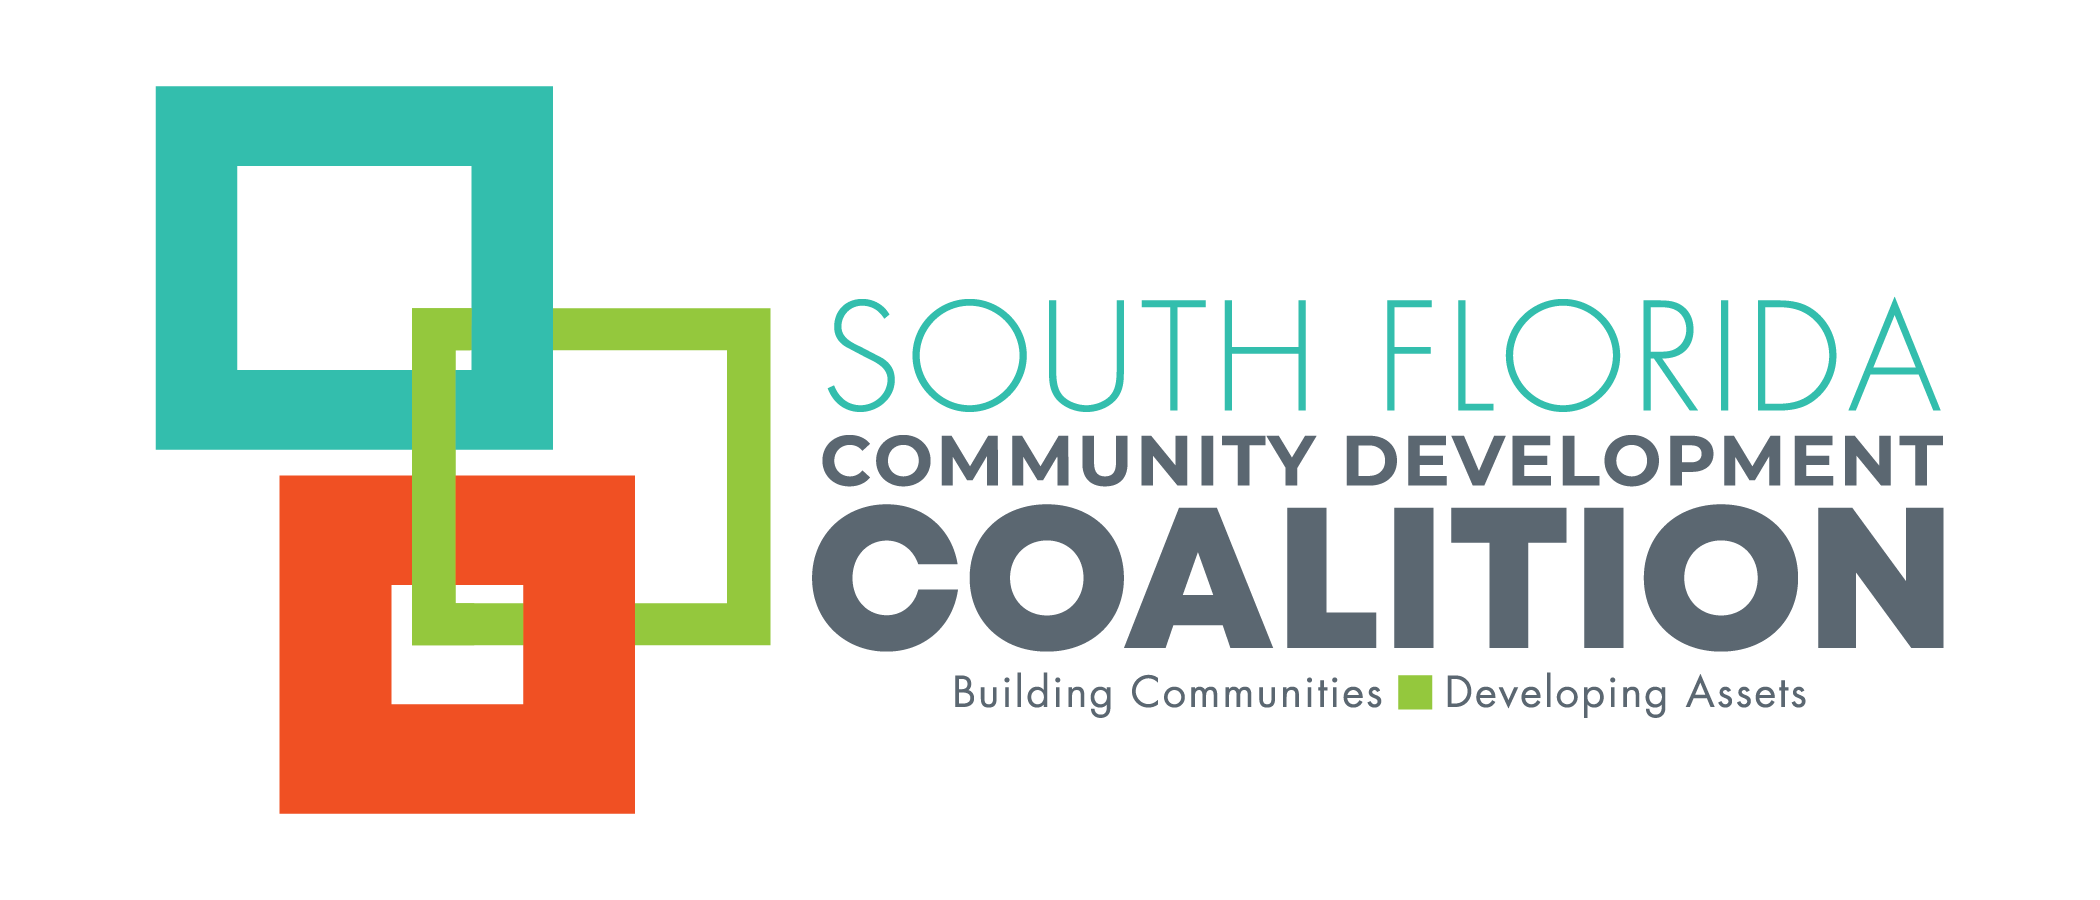 South Florida Community Development Coalition - Florida Policy Timeline